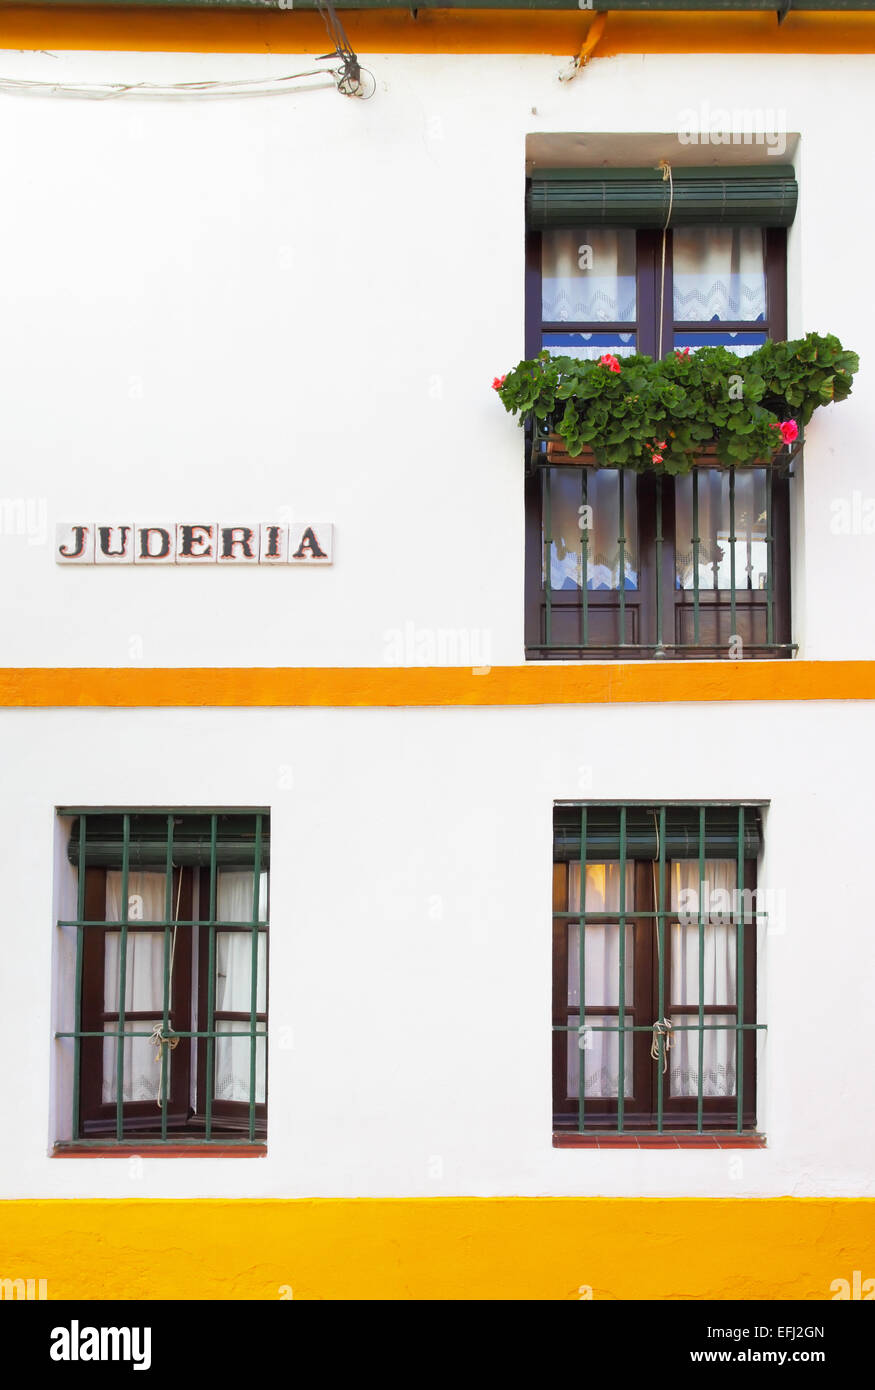 Old house on Juderia street in Seville Stock Photo